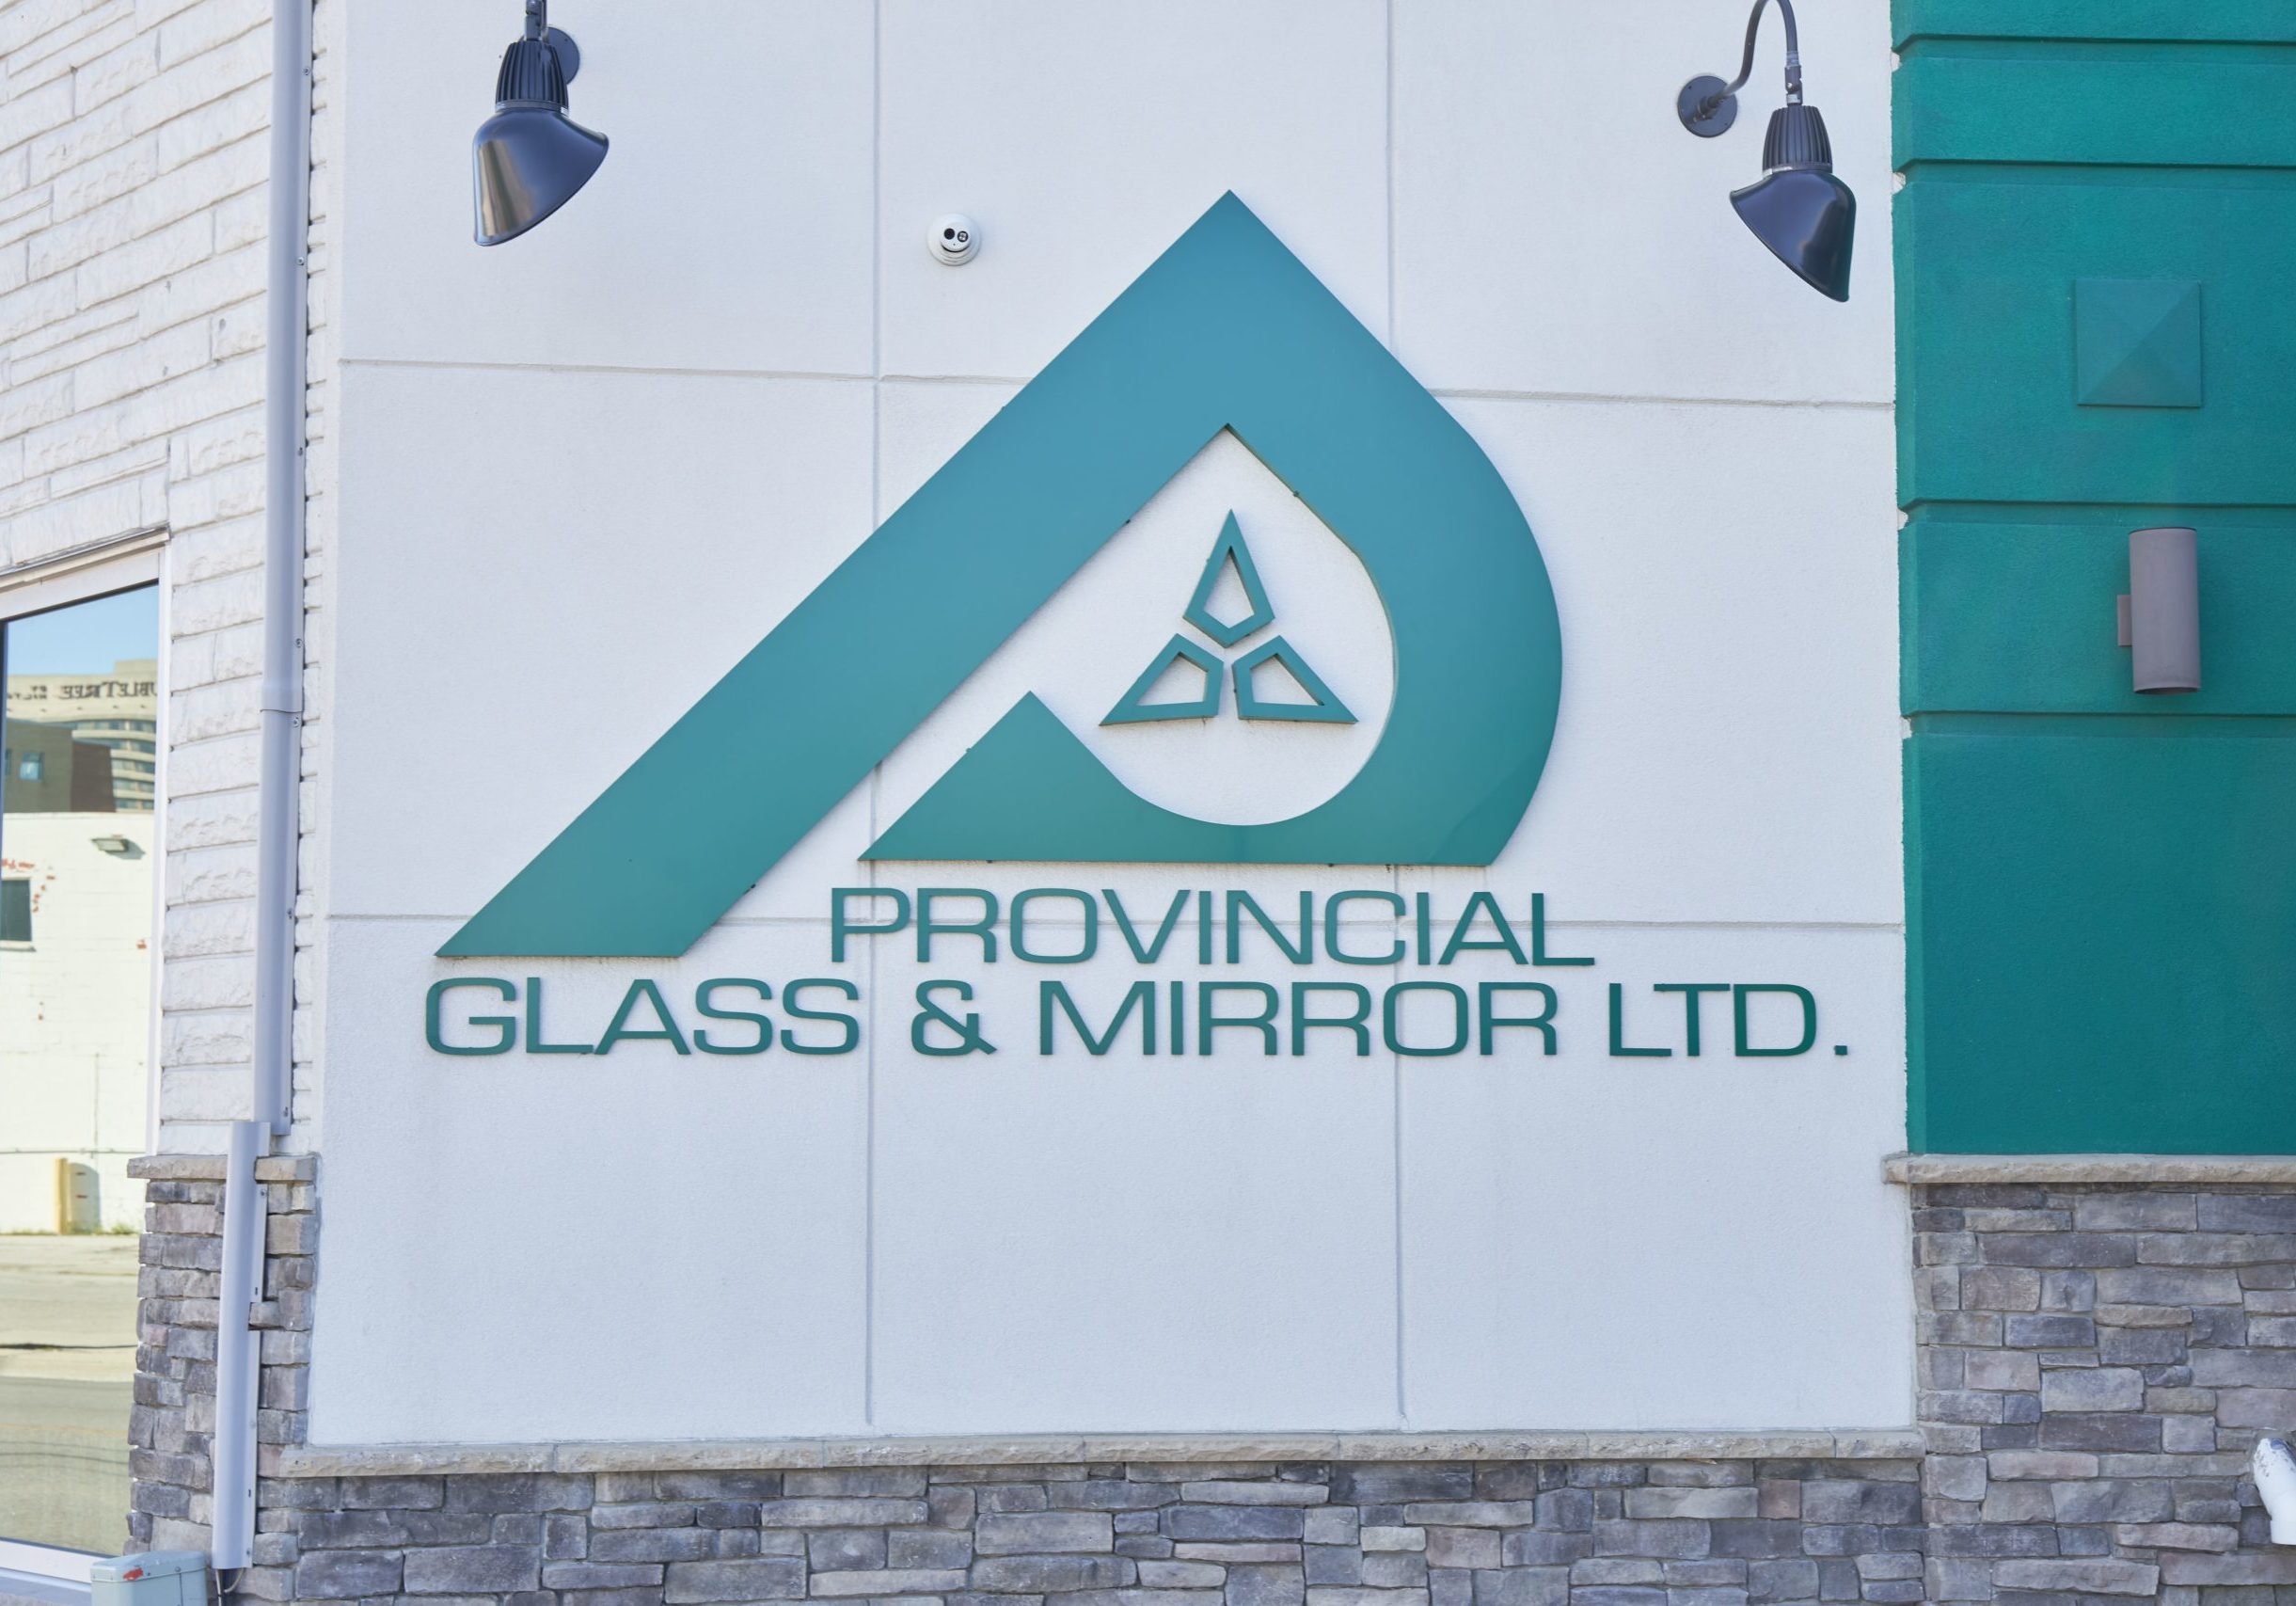 Provincial Glass & Mirror Ltd Location In London, Ontario